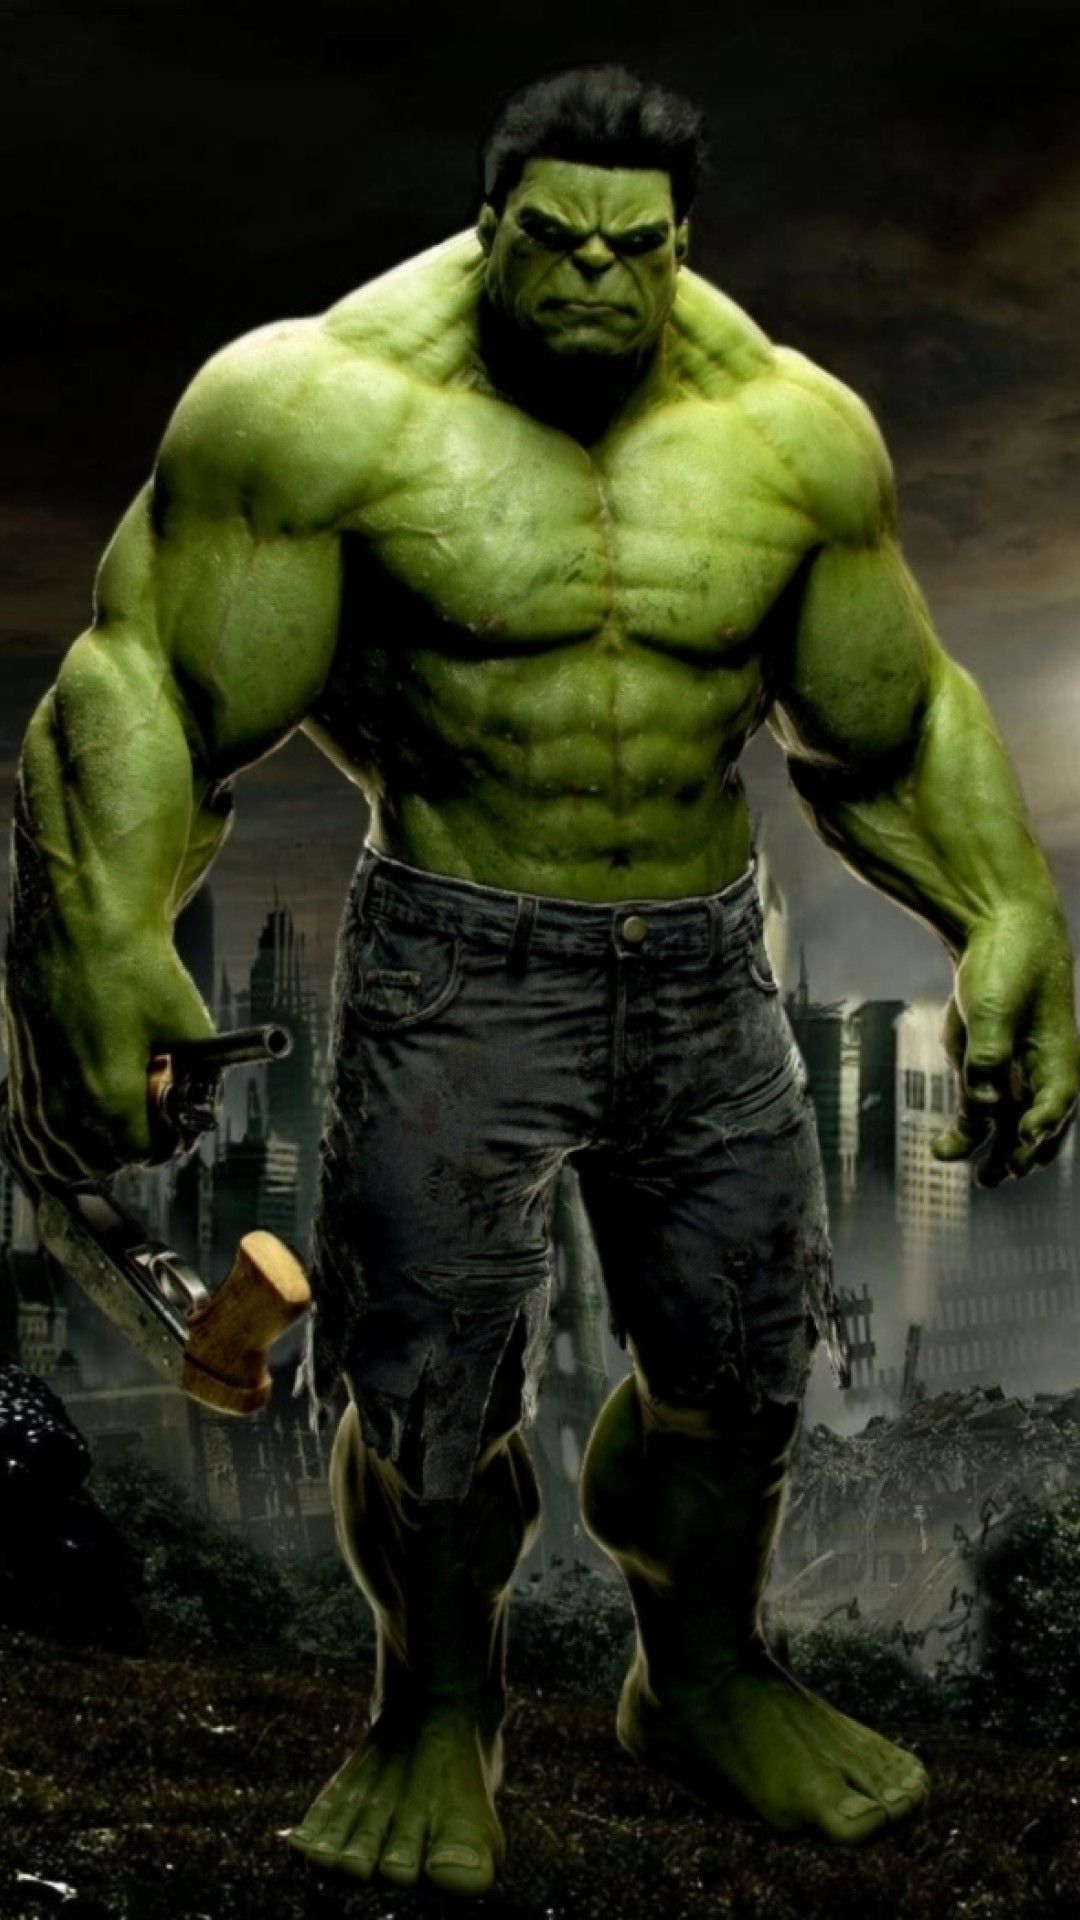 The Incredible Hulk HD Wallpaper for Desktop and Mobiles iPhone 6 / 6S Plus